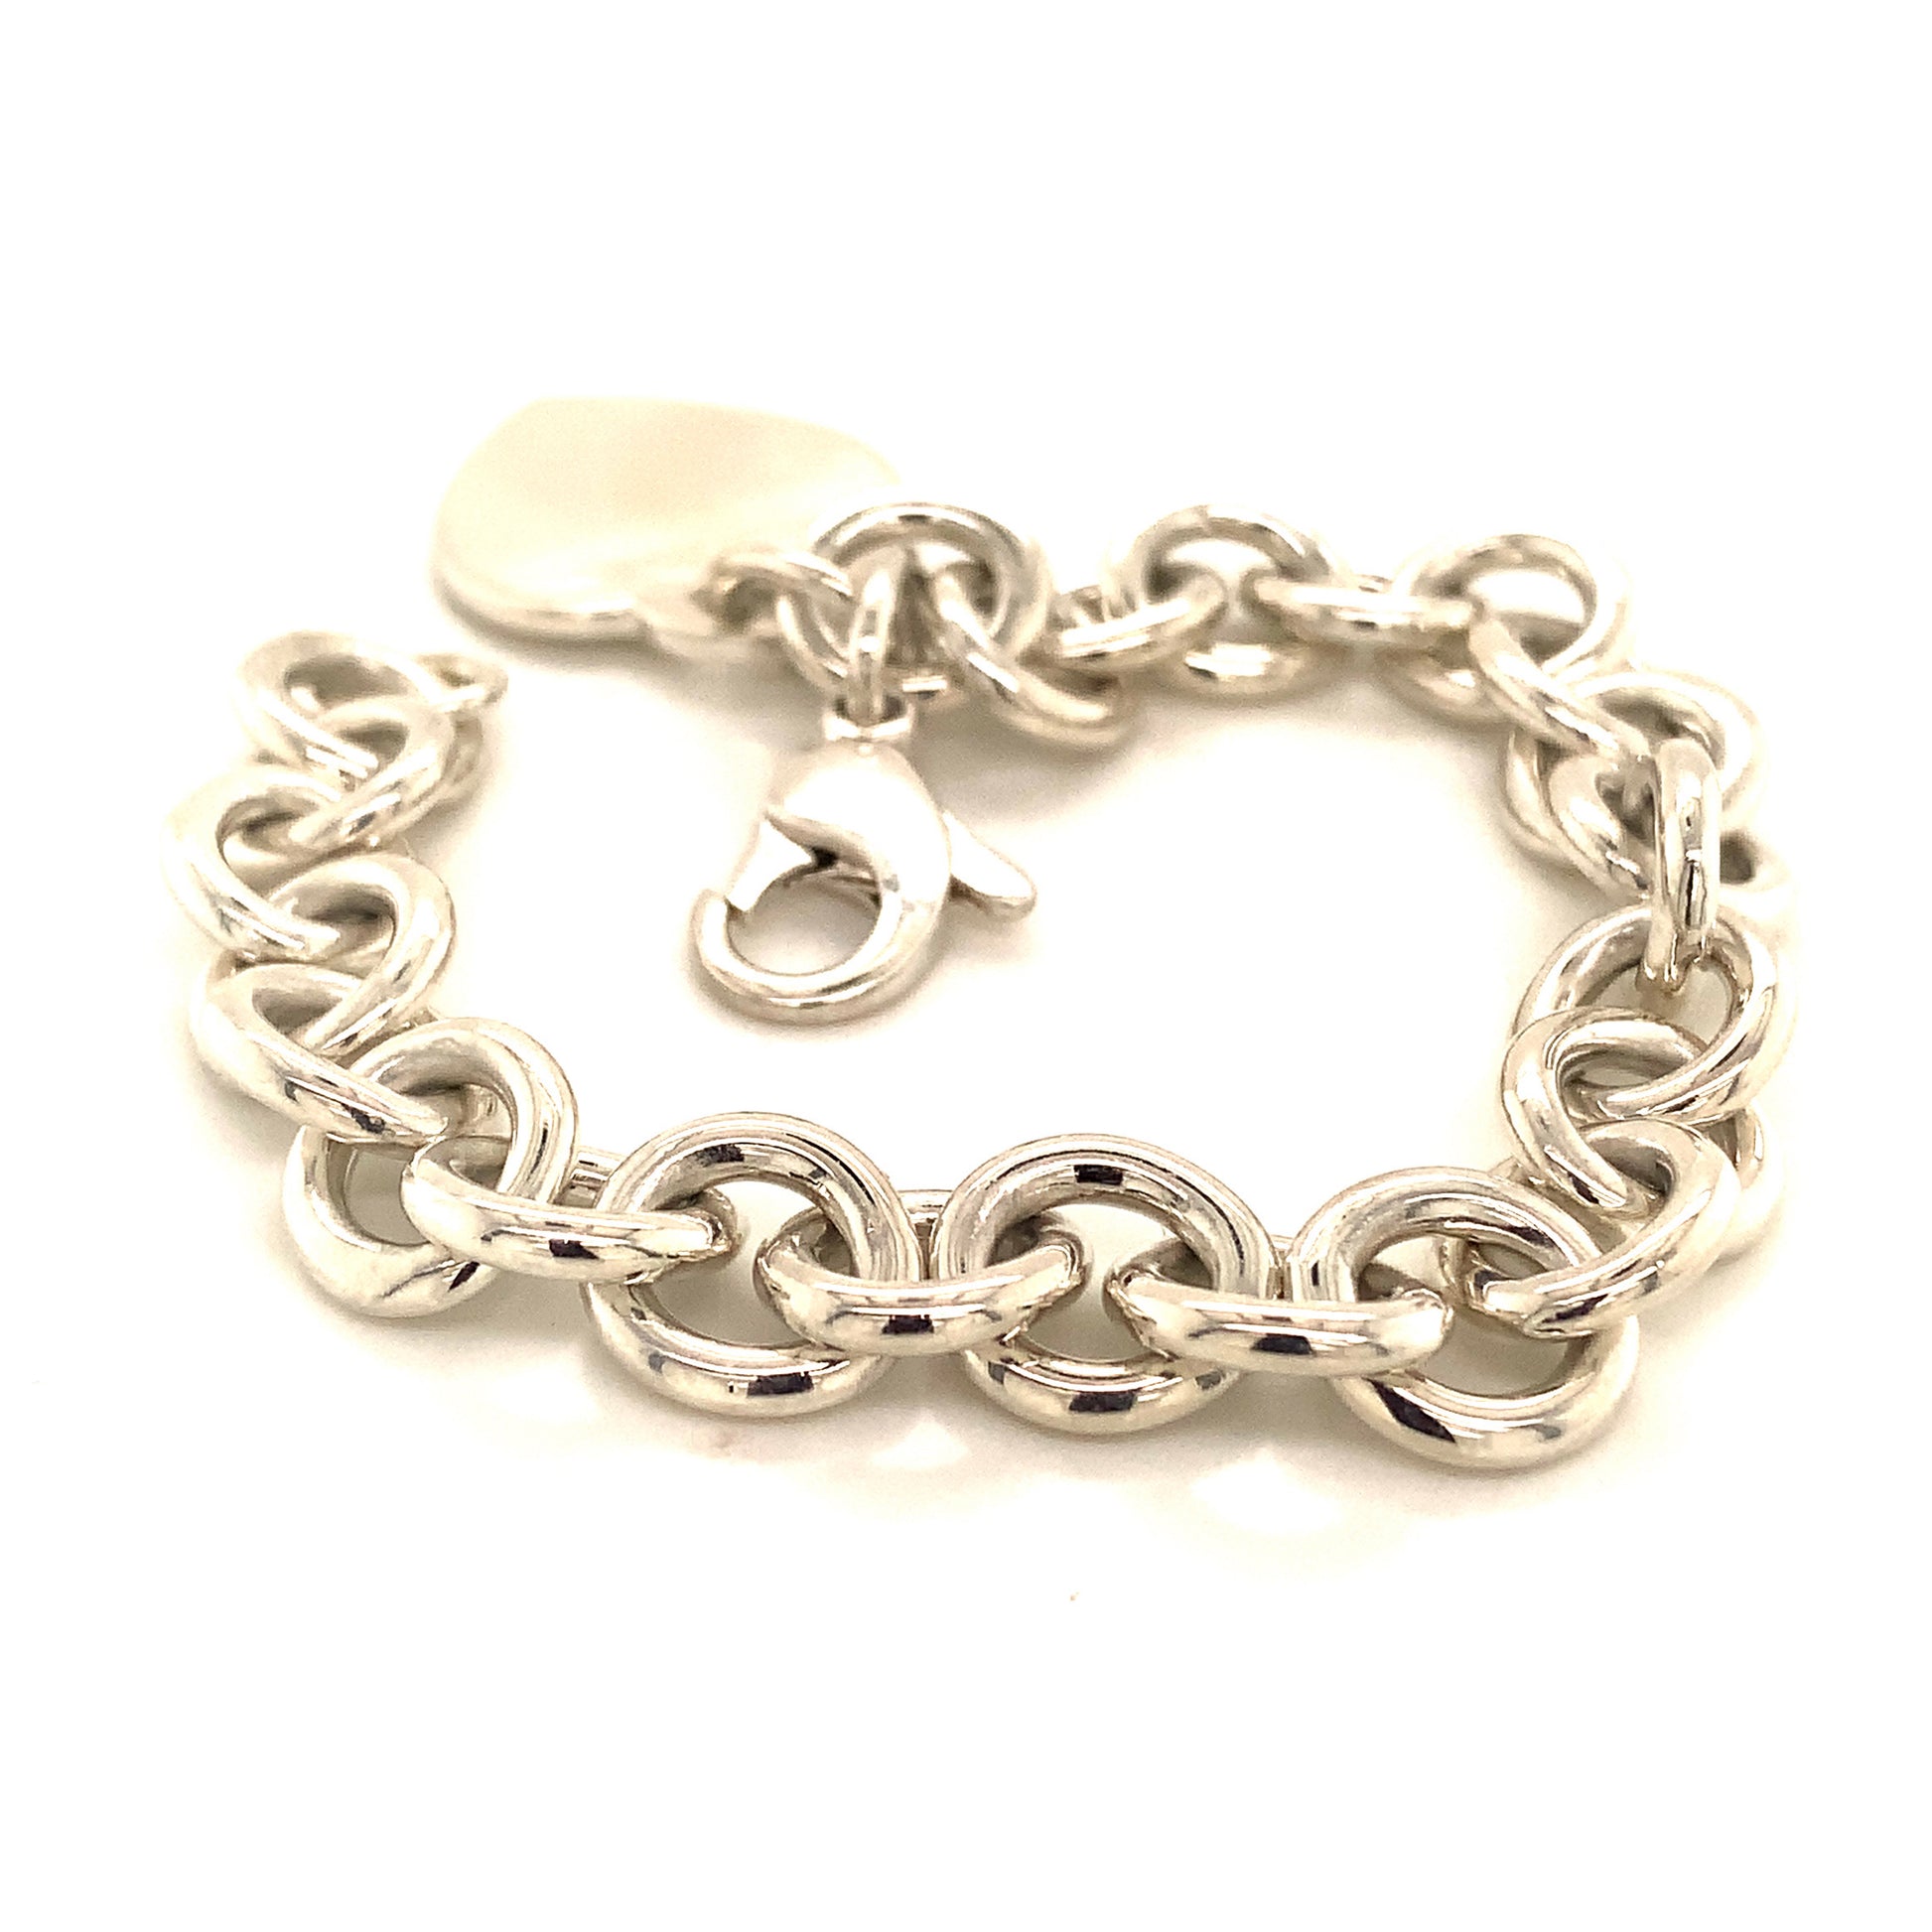 Tiffany & Co Estate Sterling Silver Bracelet 7 Inches 34.2 Grams TIF102 - Certified Fine Jewelry